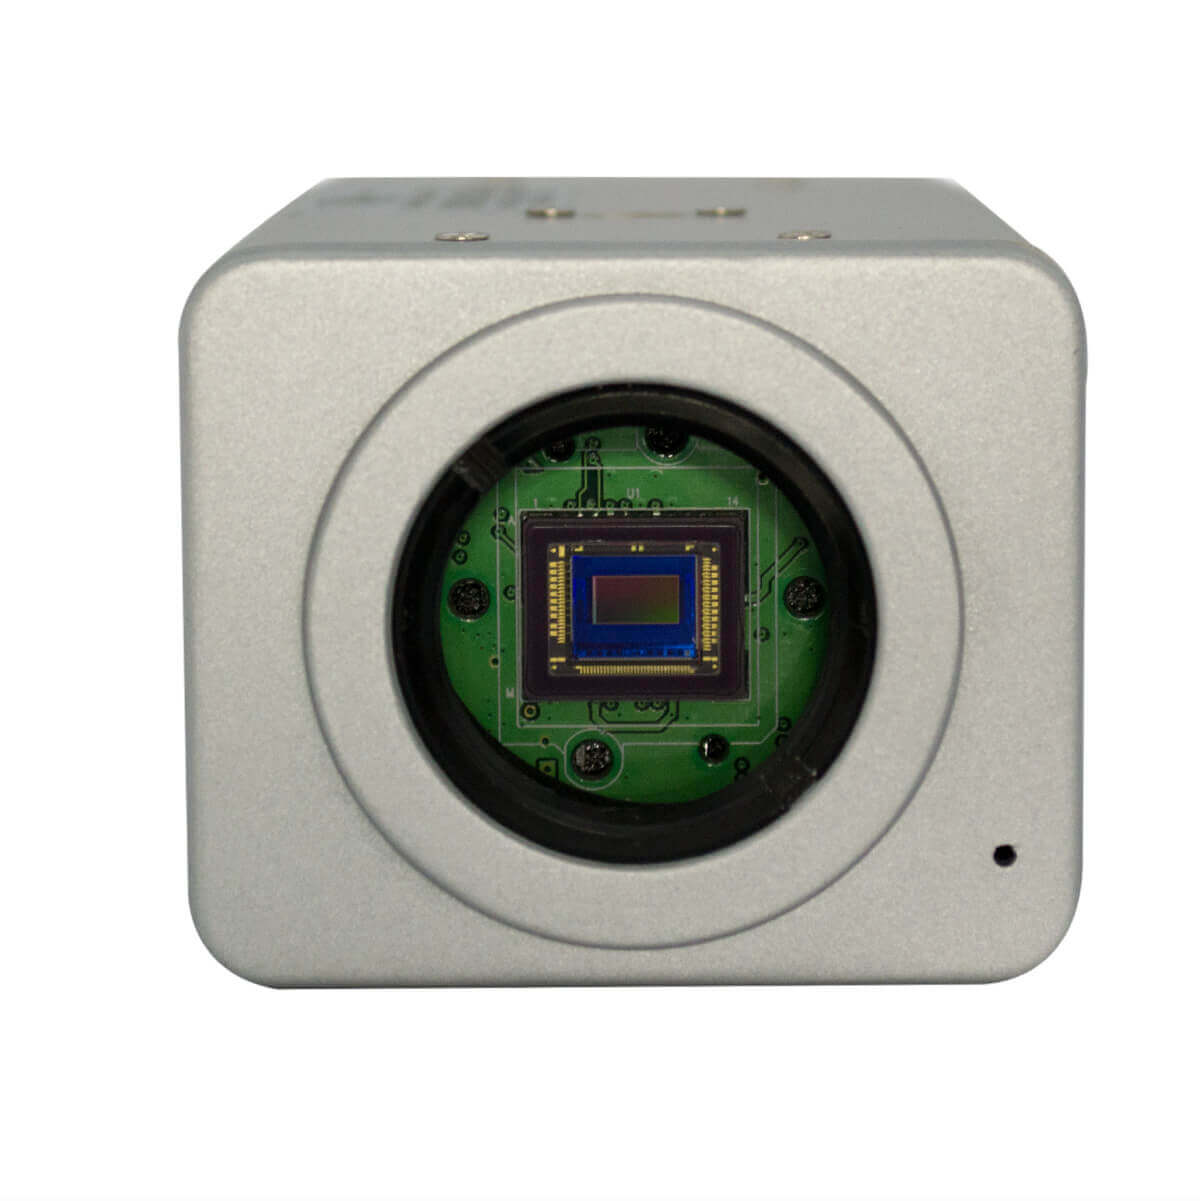 Camara tipo box antivandalica HD-SDI, 2.0 MP, 1/3 CMOS, 1080p, Menu OSD, Deteccion Inteligente.